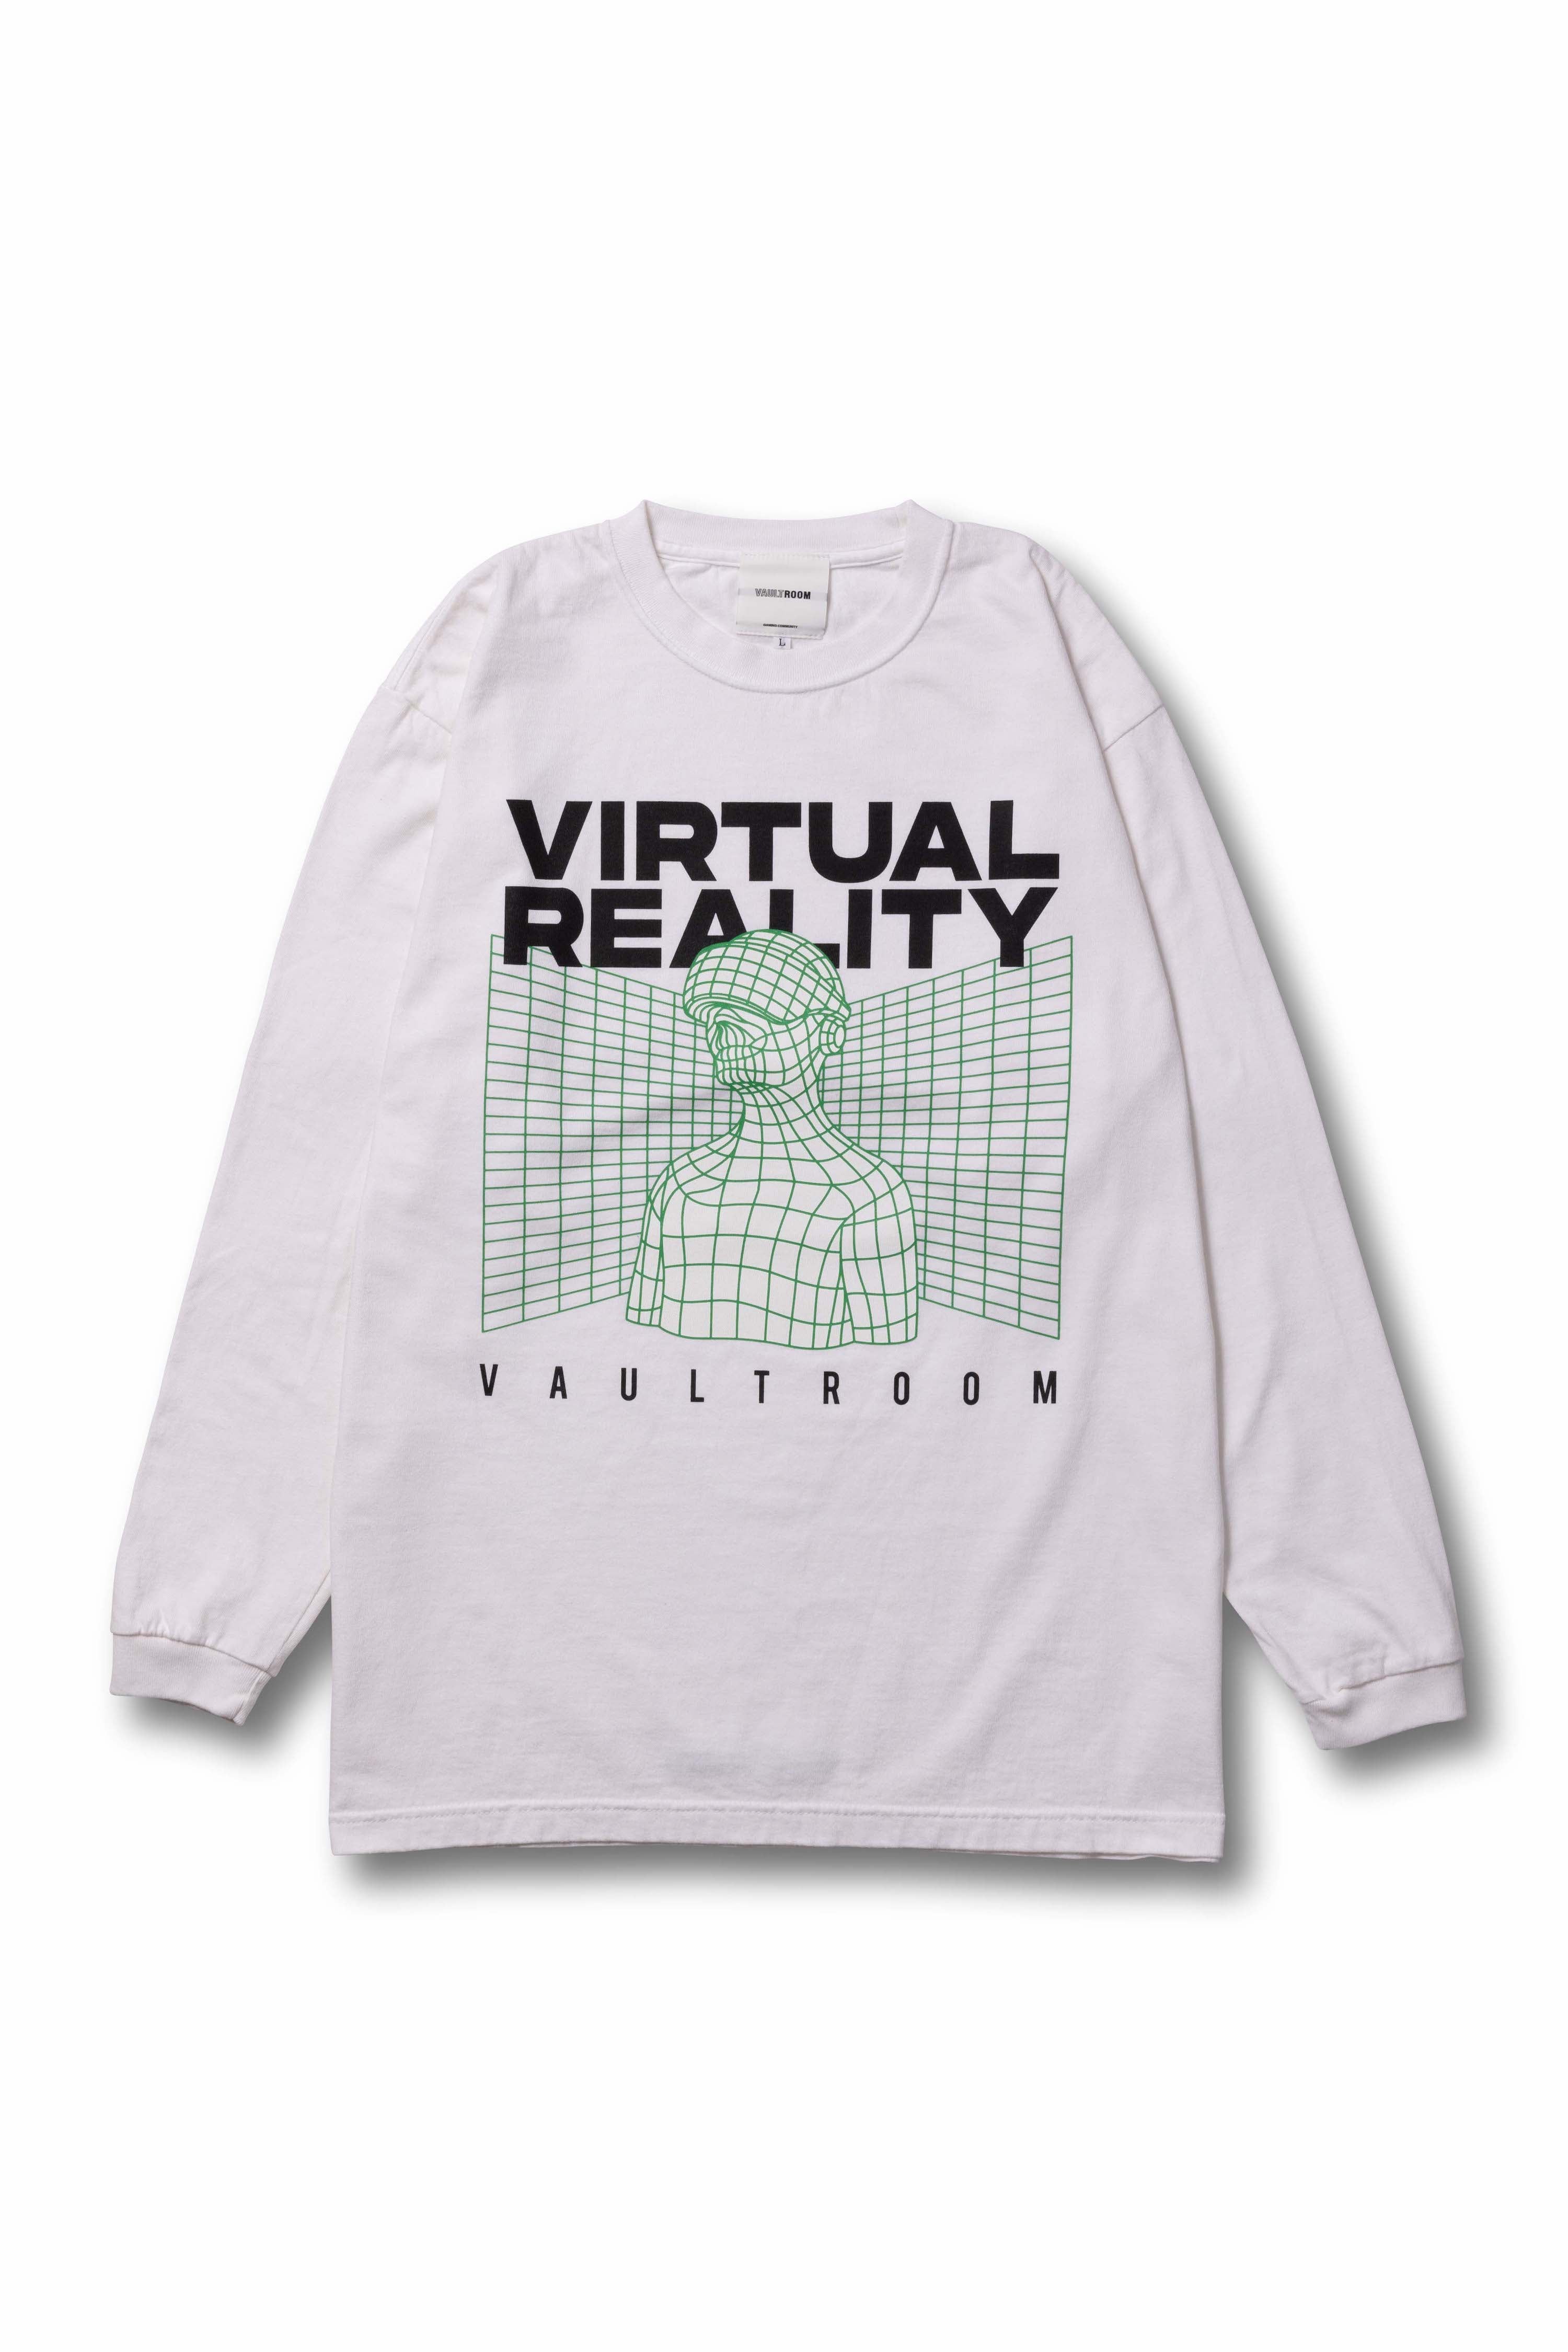 VAULTROOM】VIRTUAL REALITY L/S TEE-